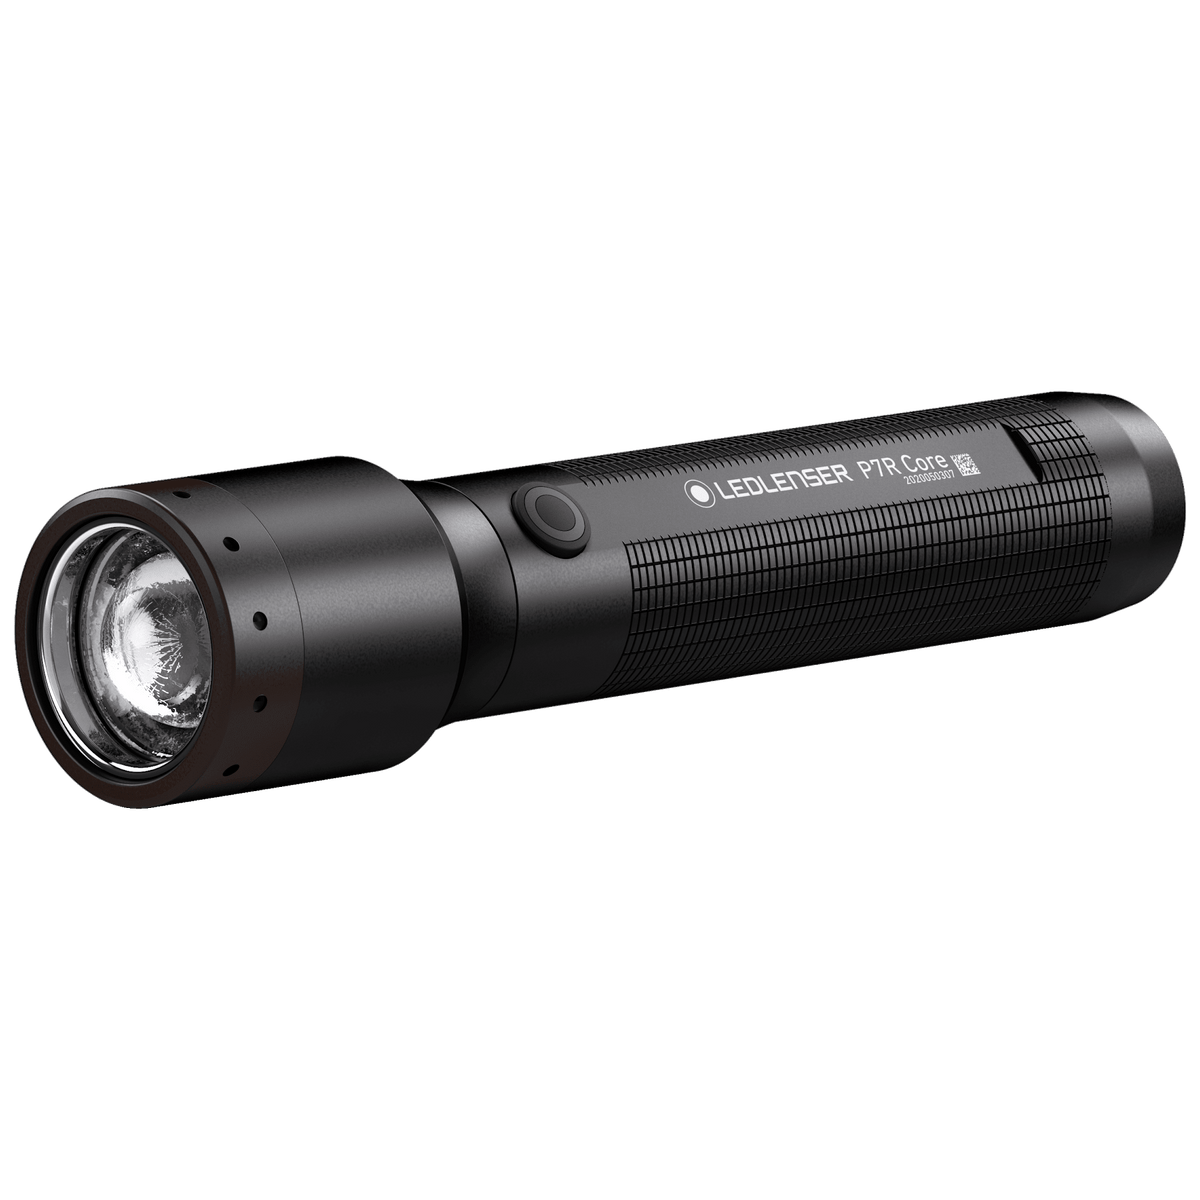 Ledlenser P7R Core 1400 Lumens Rechargeable Flashlight Flashlights and Lighting Ledlenser Tactical Gear Supplier Tactical Distributors Australia